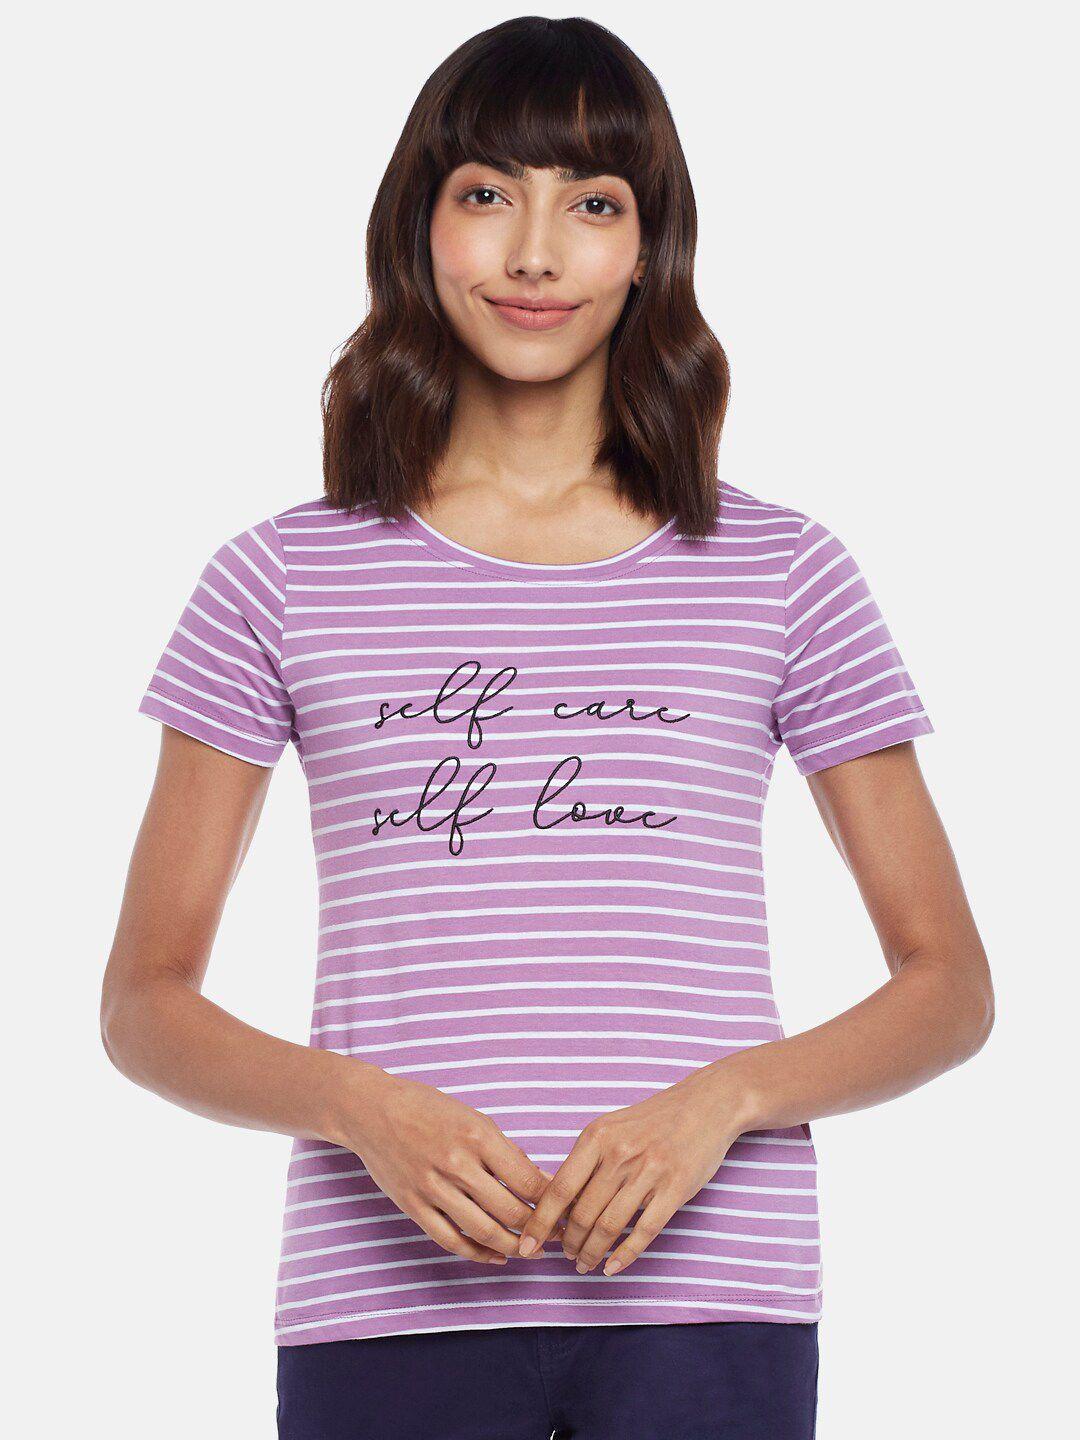 honey by pantaloons women lavender & white striped t-shirt